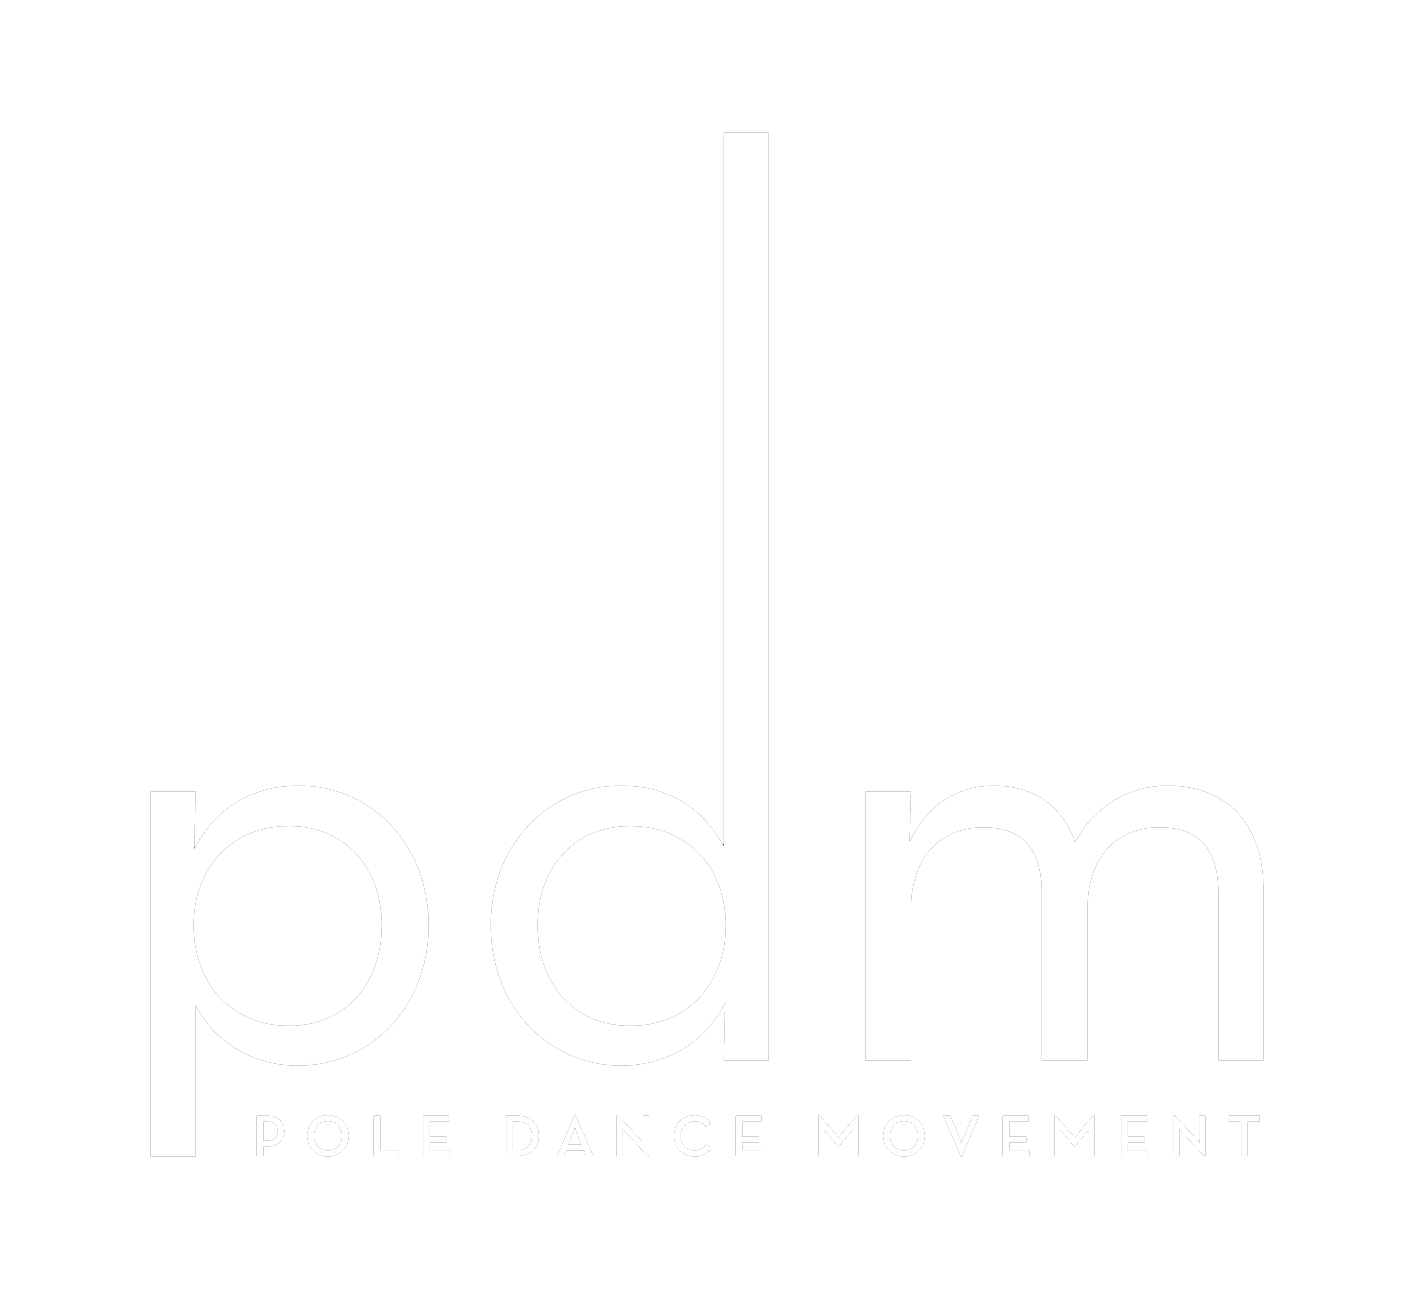 Pole Dance Movement